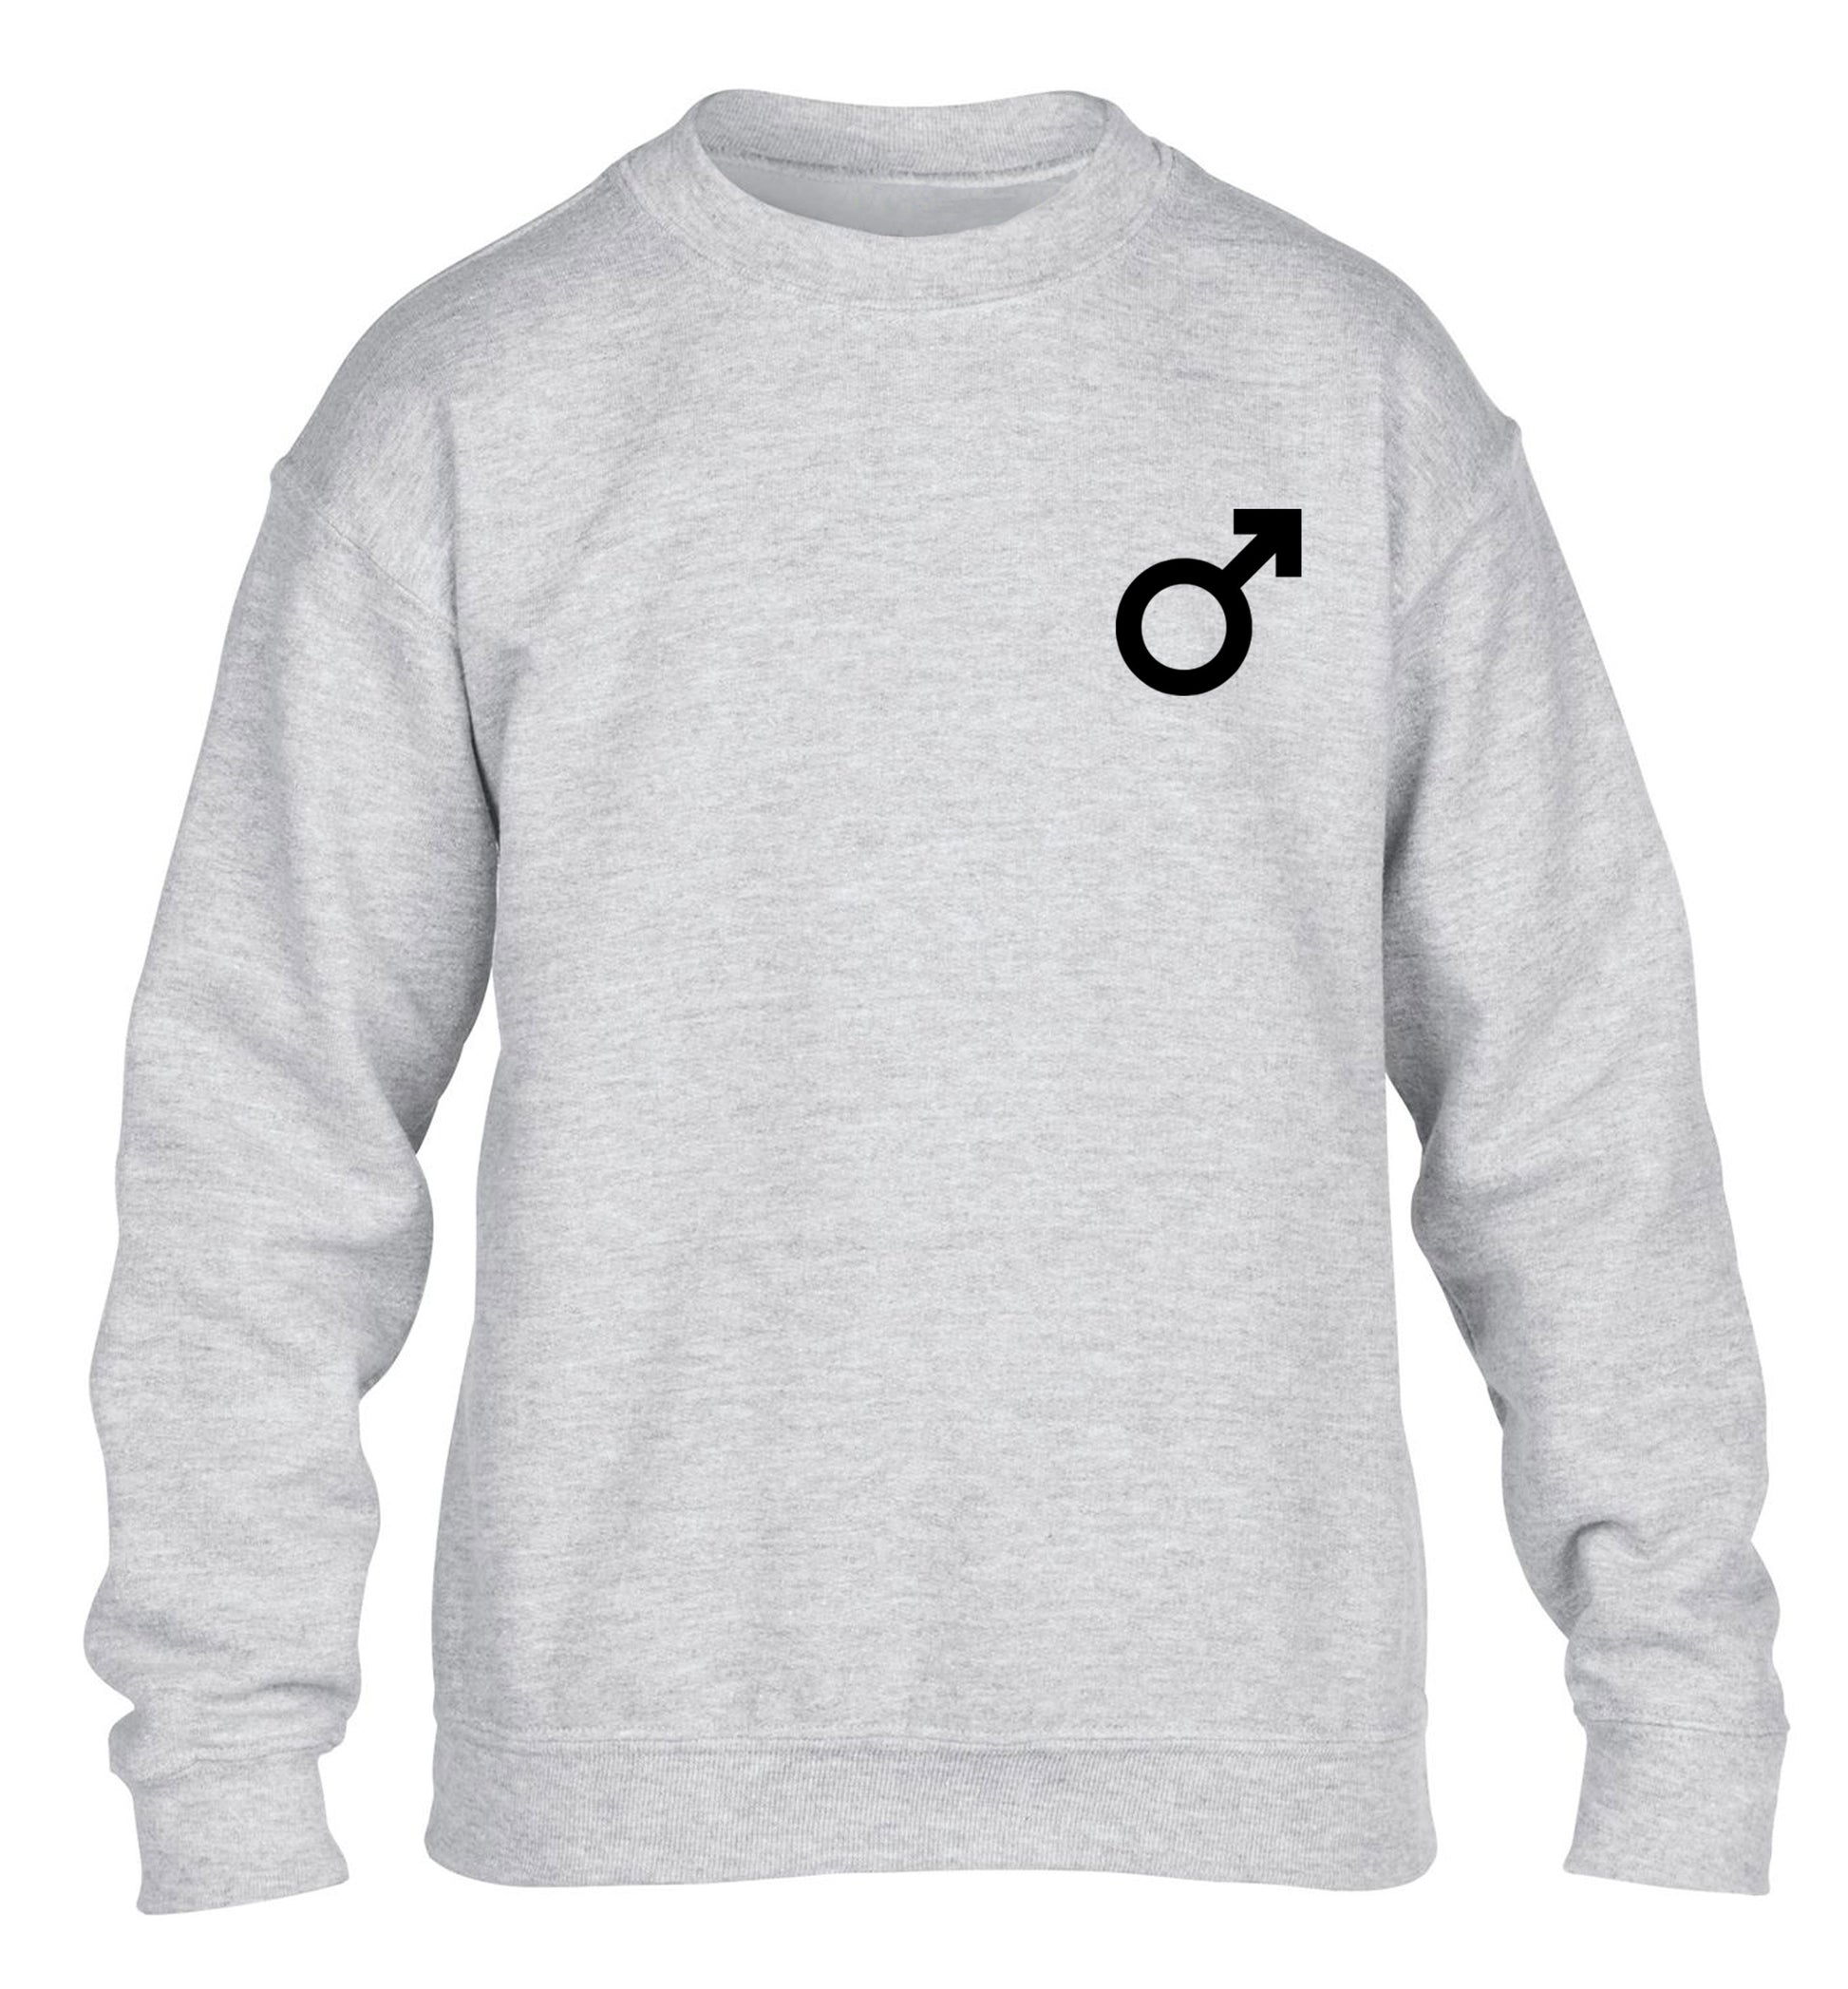 Male symbol pocket children's grey sweater 12-14 Years